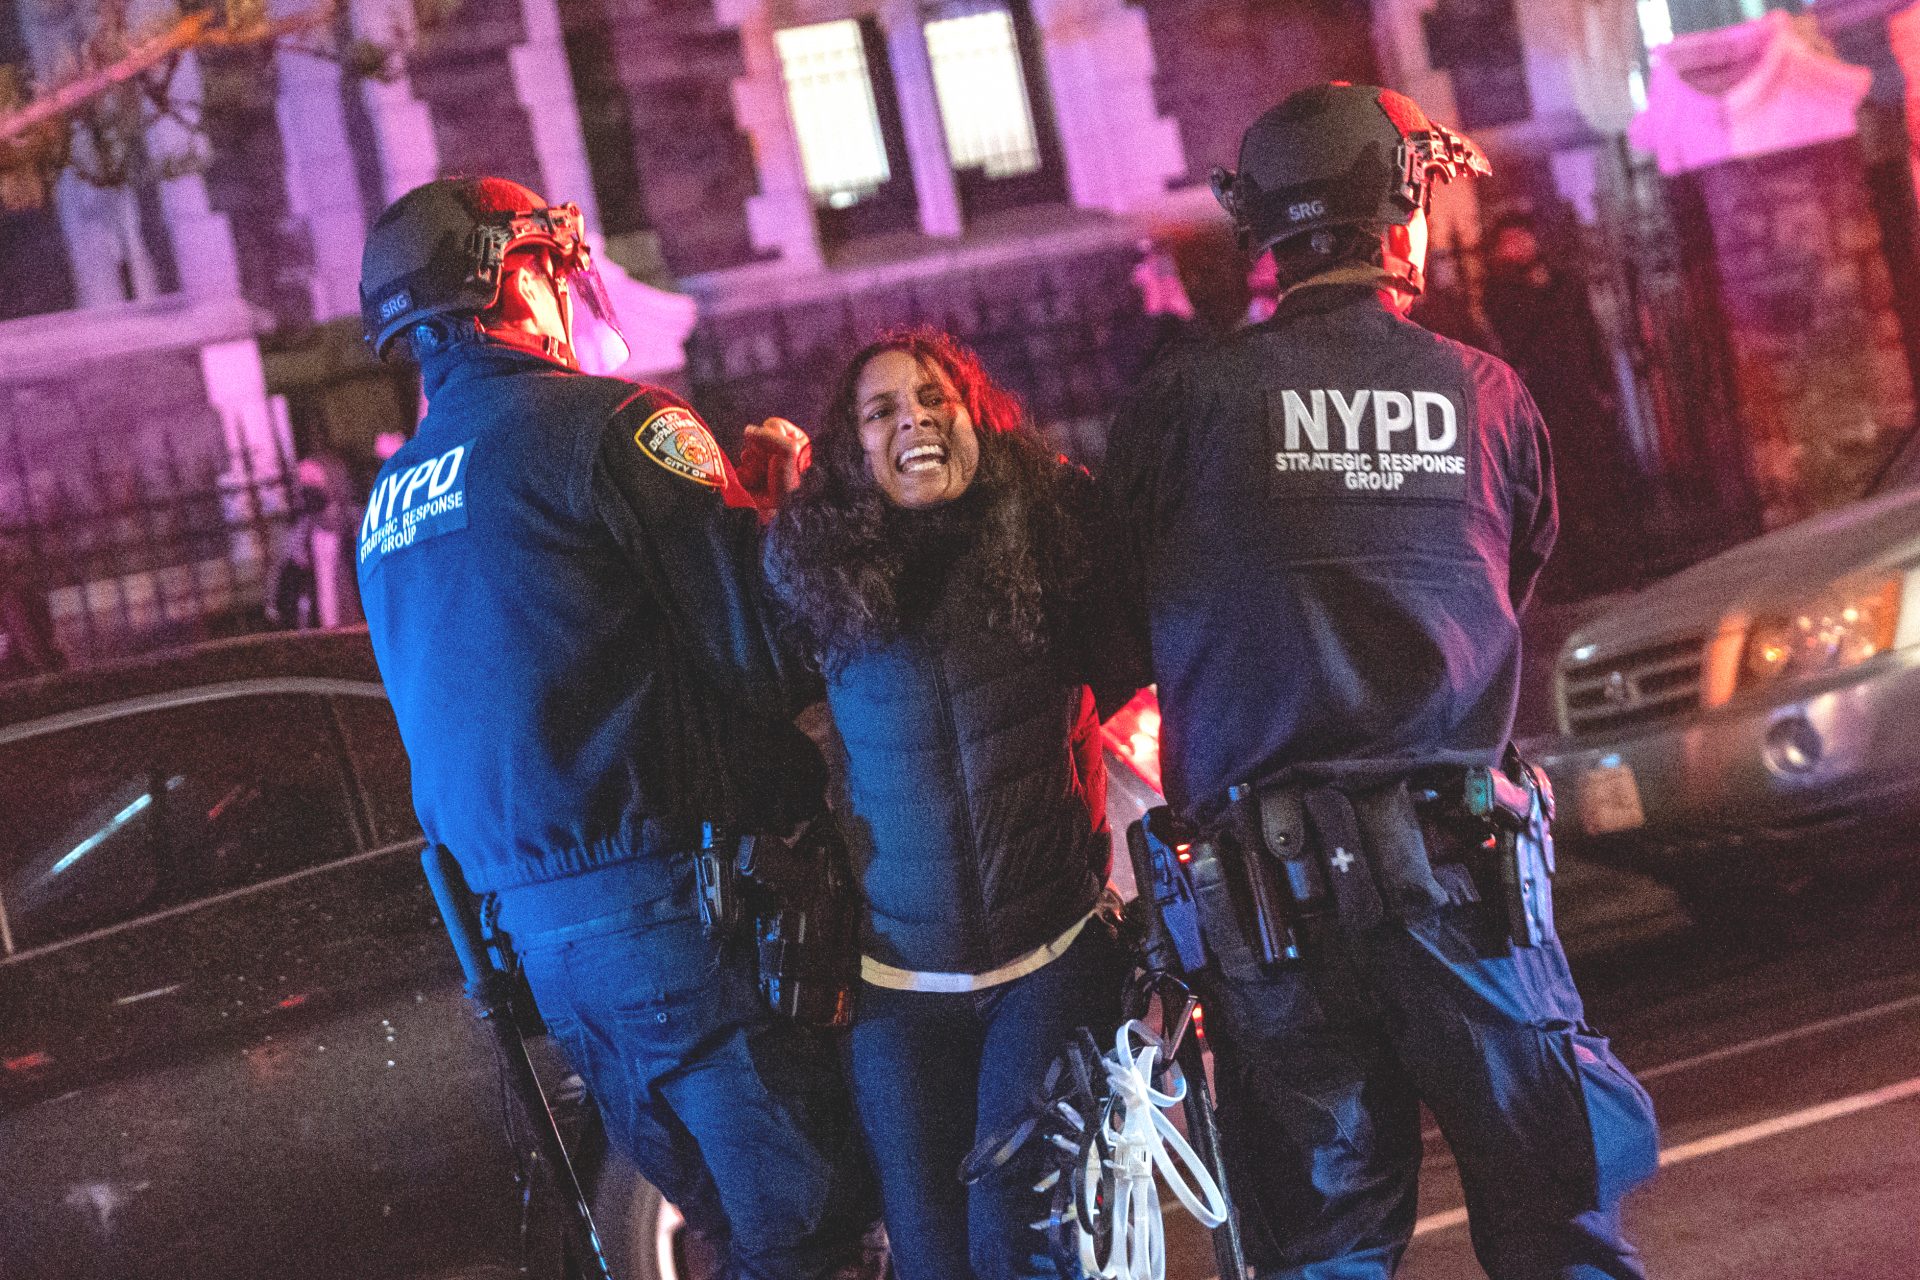 Mass arrests in New York